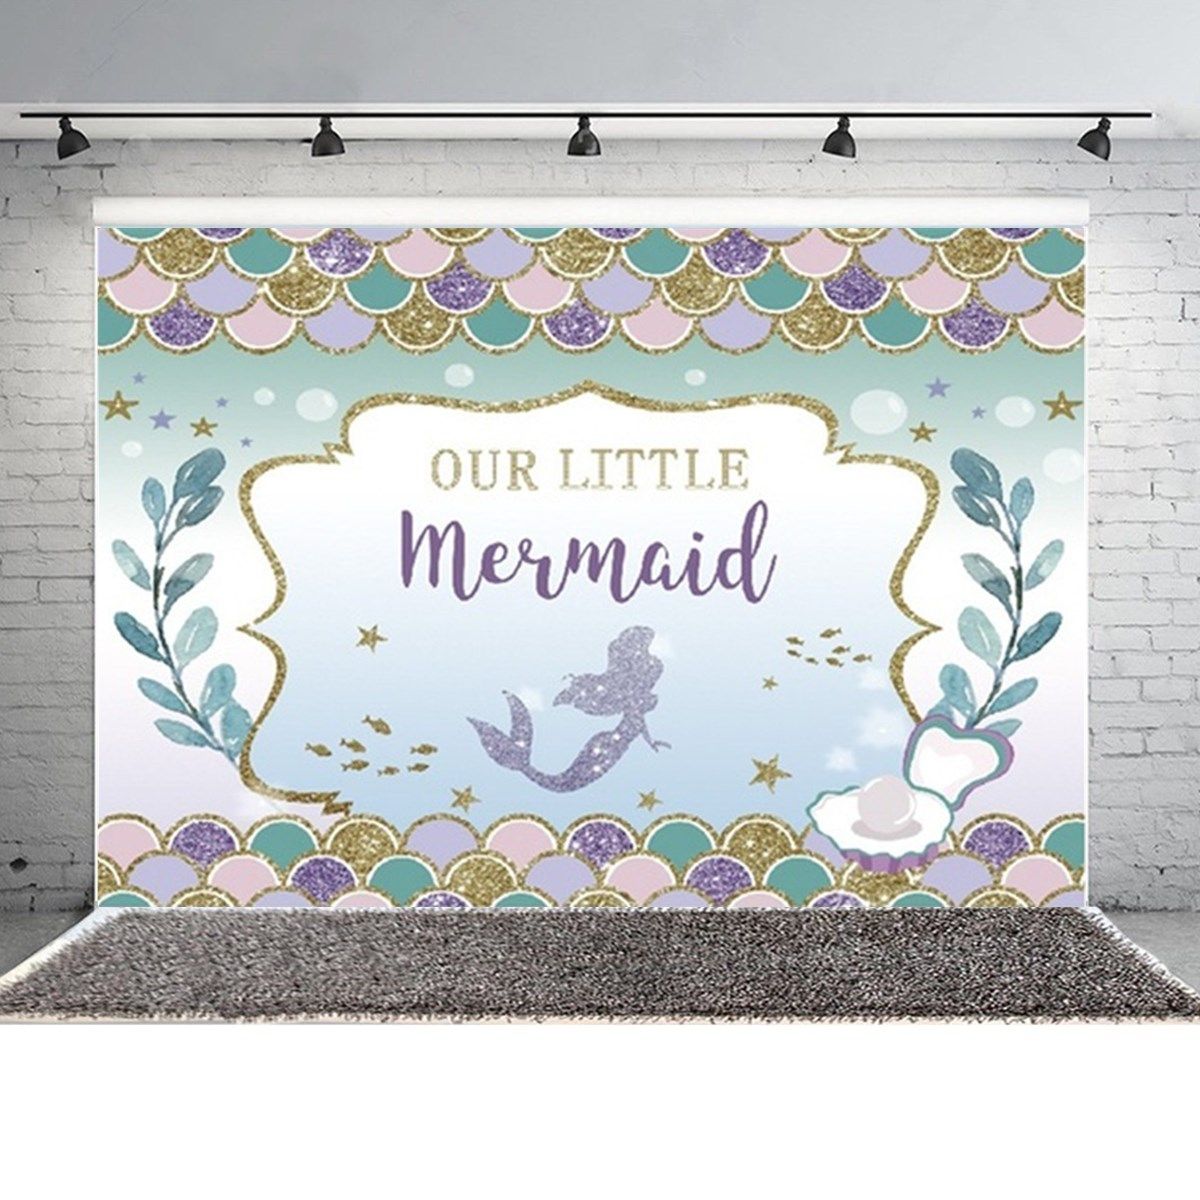 7x5-Mermaid-Party-Backdrop-Birthday-Newborn-Photography-Baby-Shower-Decorations-1515473